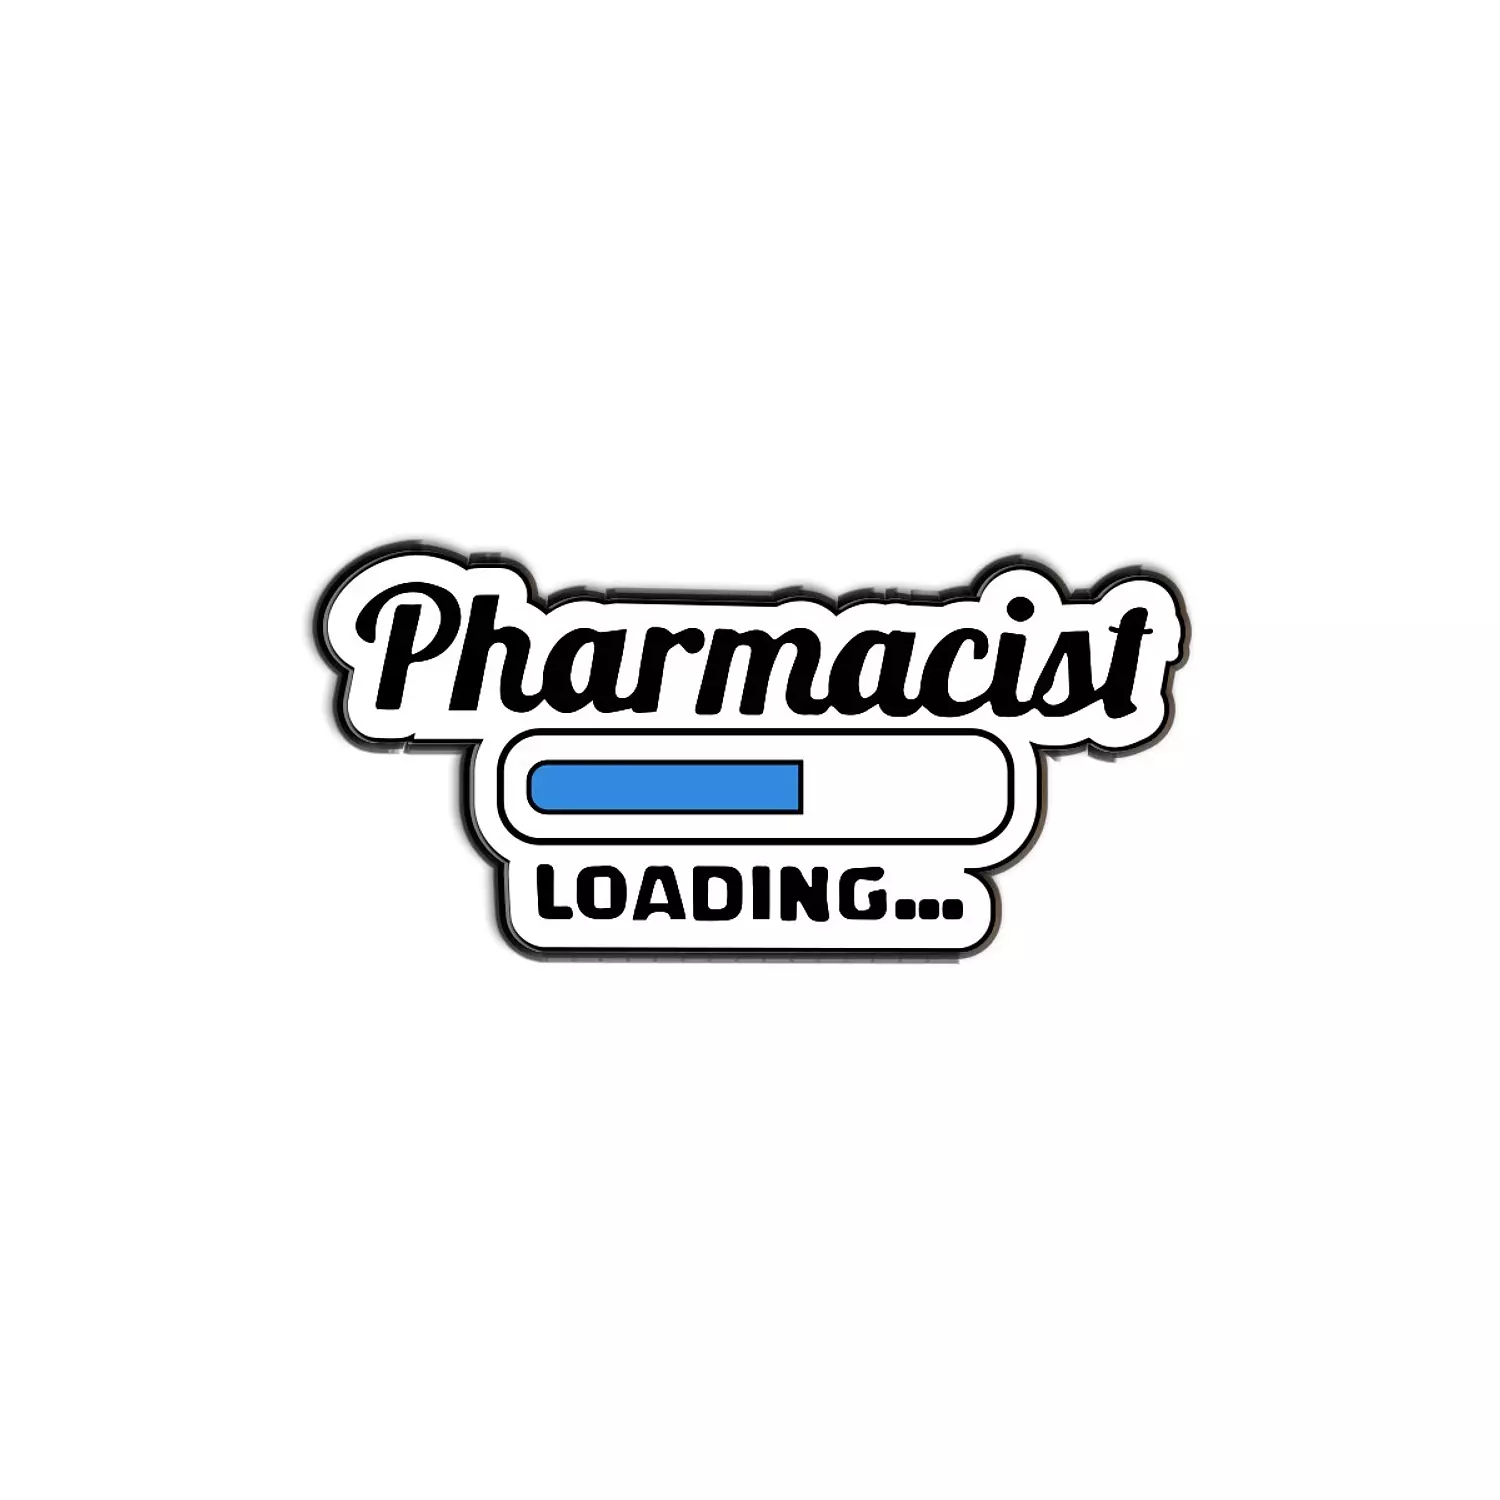 pharmacist loading…   hover image